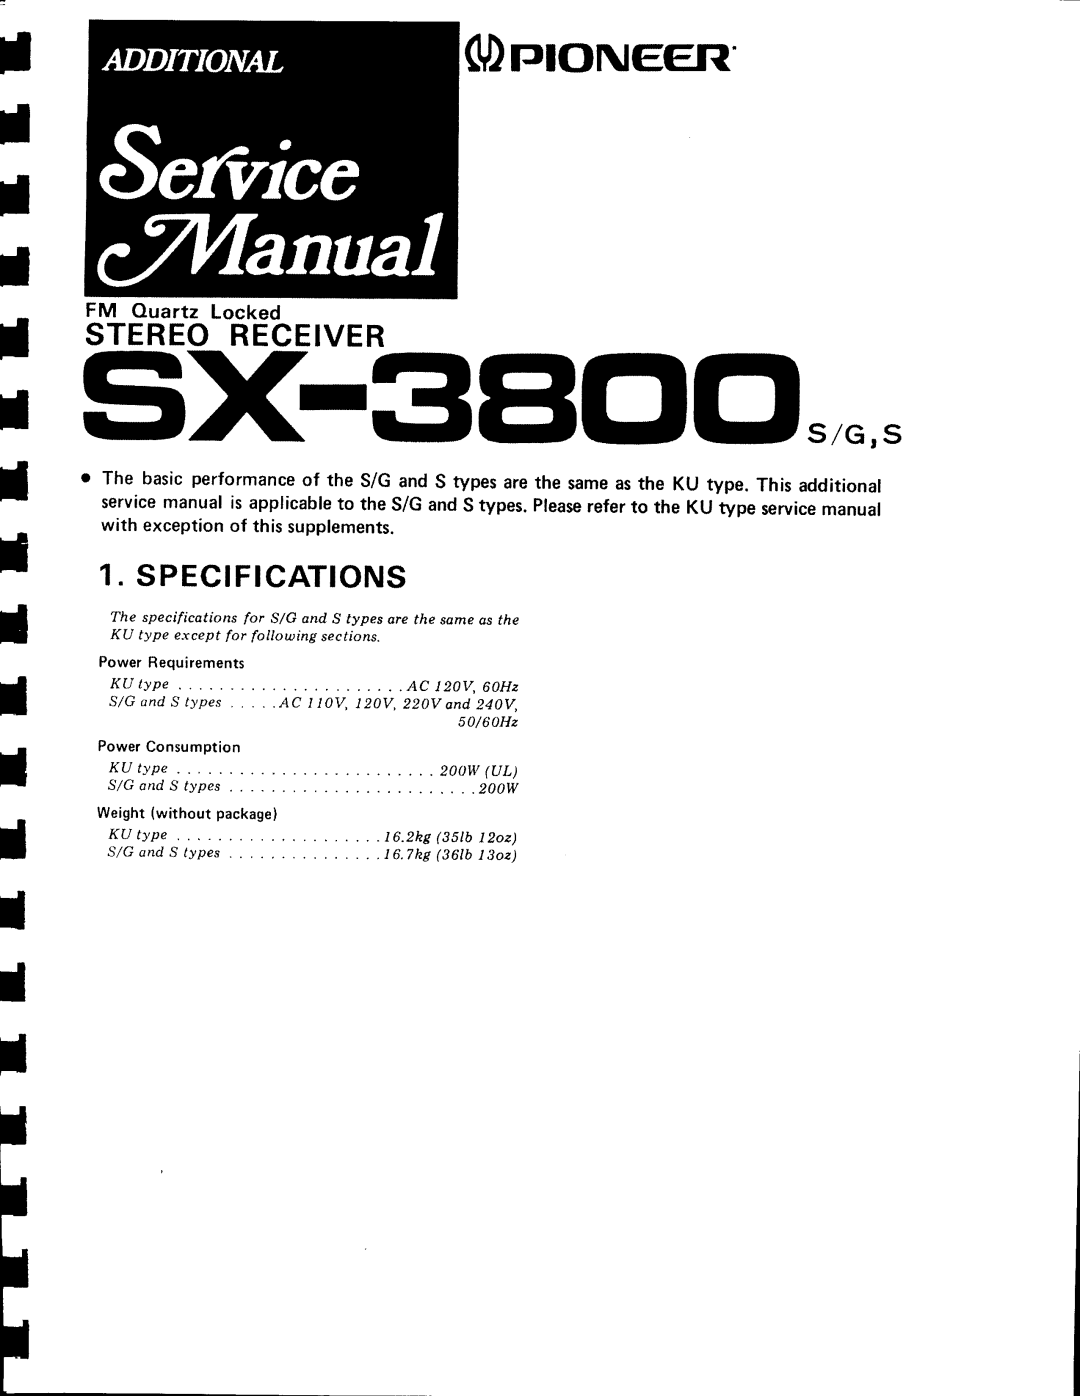 Pioneer SX-3800 manual siFSgoos,c,s, $rrroN€Err, Stereoreceiver, S P E C F I C A T I O N S, FM Ouartz Locked 